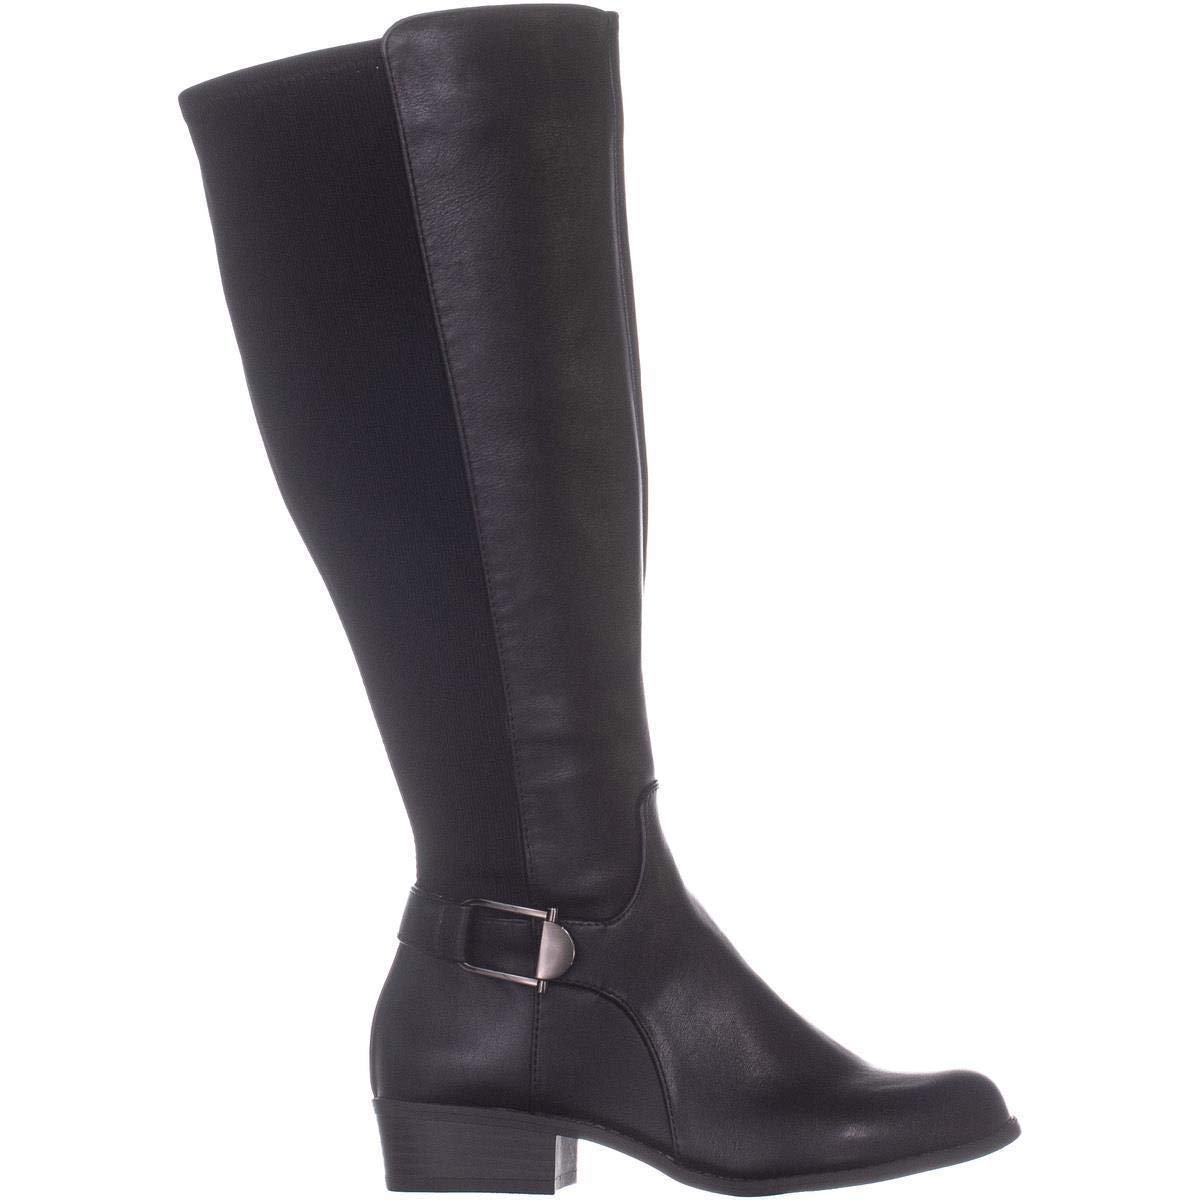 Alfani Womens Boots in Black Color, Size 10 UYB | eBay